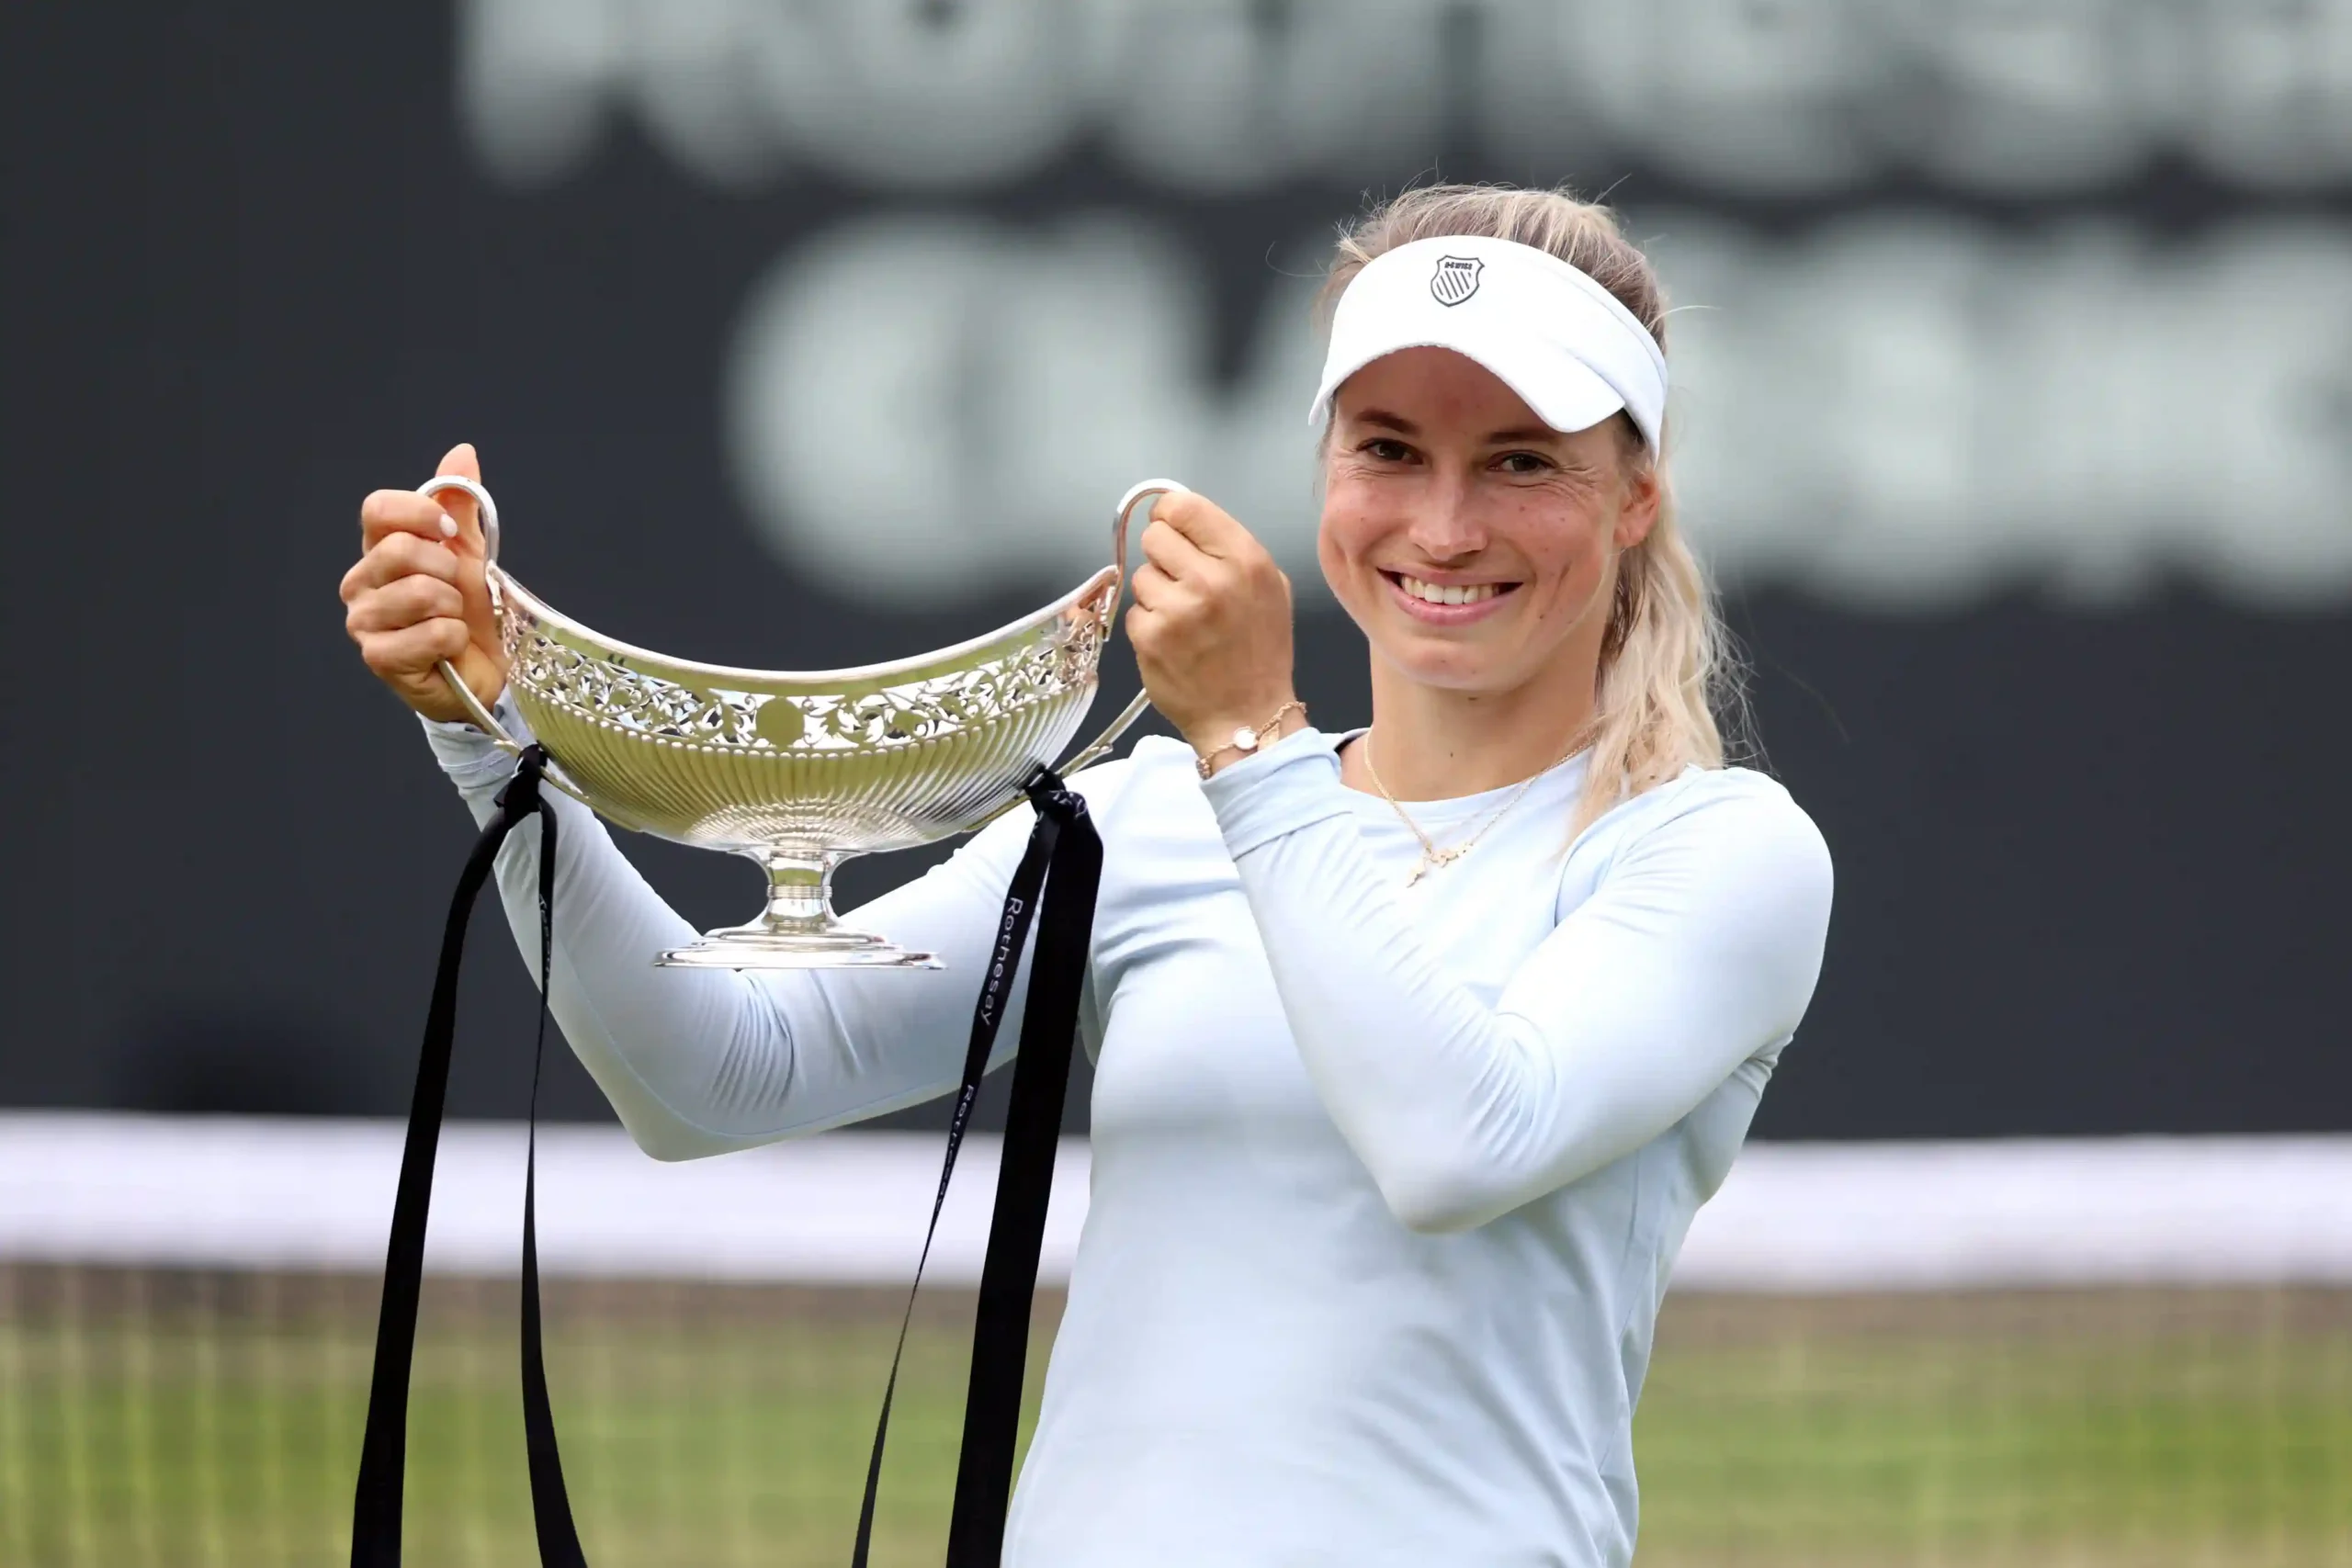 Yulia Putintseva with her maiden wta title